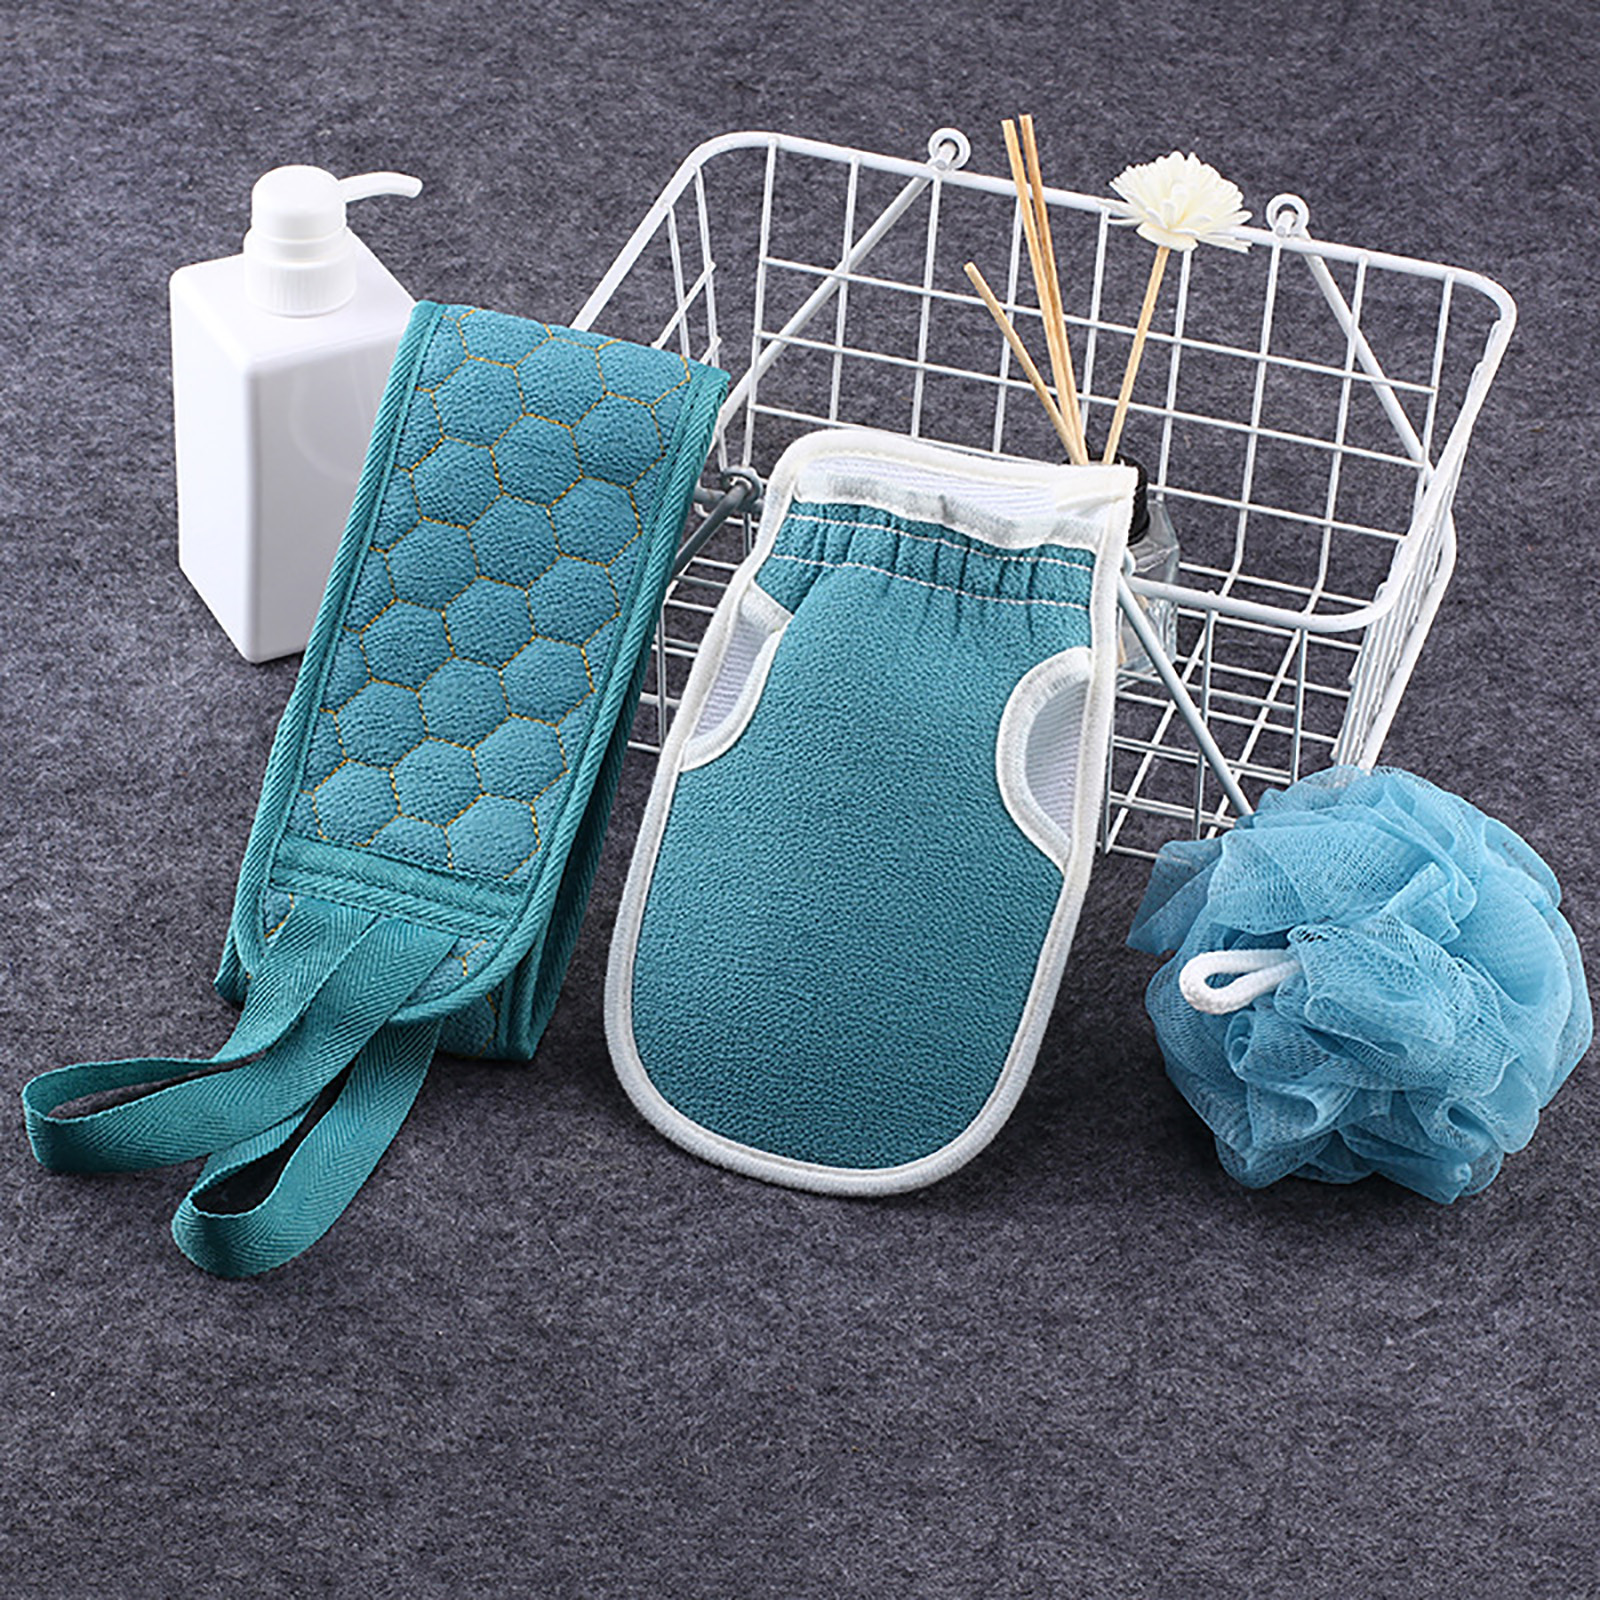 Bath Body Care Set Lavender Vanilla Blush Portable Cleaning - Temu